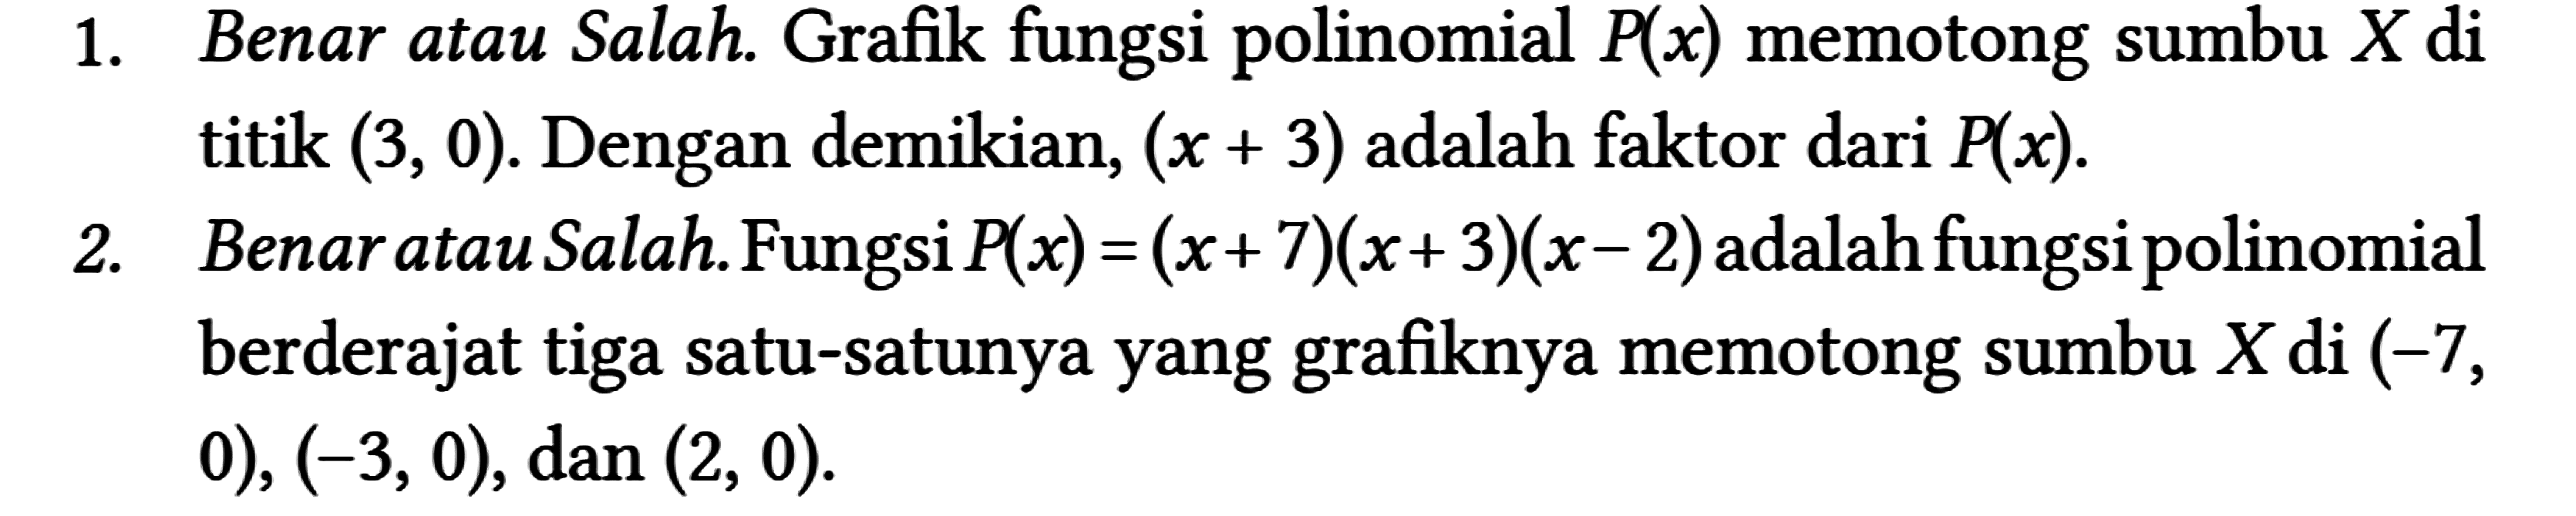 1. Benar atau Salah. Grafik fungsi polinomial P(x) memotong sumbu X di titik (3,0). Dengan demikian, (x + 3) adalah faktor dari P(x).
2. Benar atau Salah. Fungsi P(x) = (x + 7)(x + 3)(x - 2) adalah fungsi polinomial berderajat tiga satu-satunya yang grafiknya memotong sumbu X di (-7,0),(-3,0), dan (2,0). 